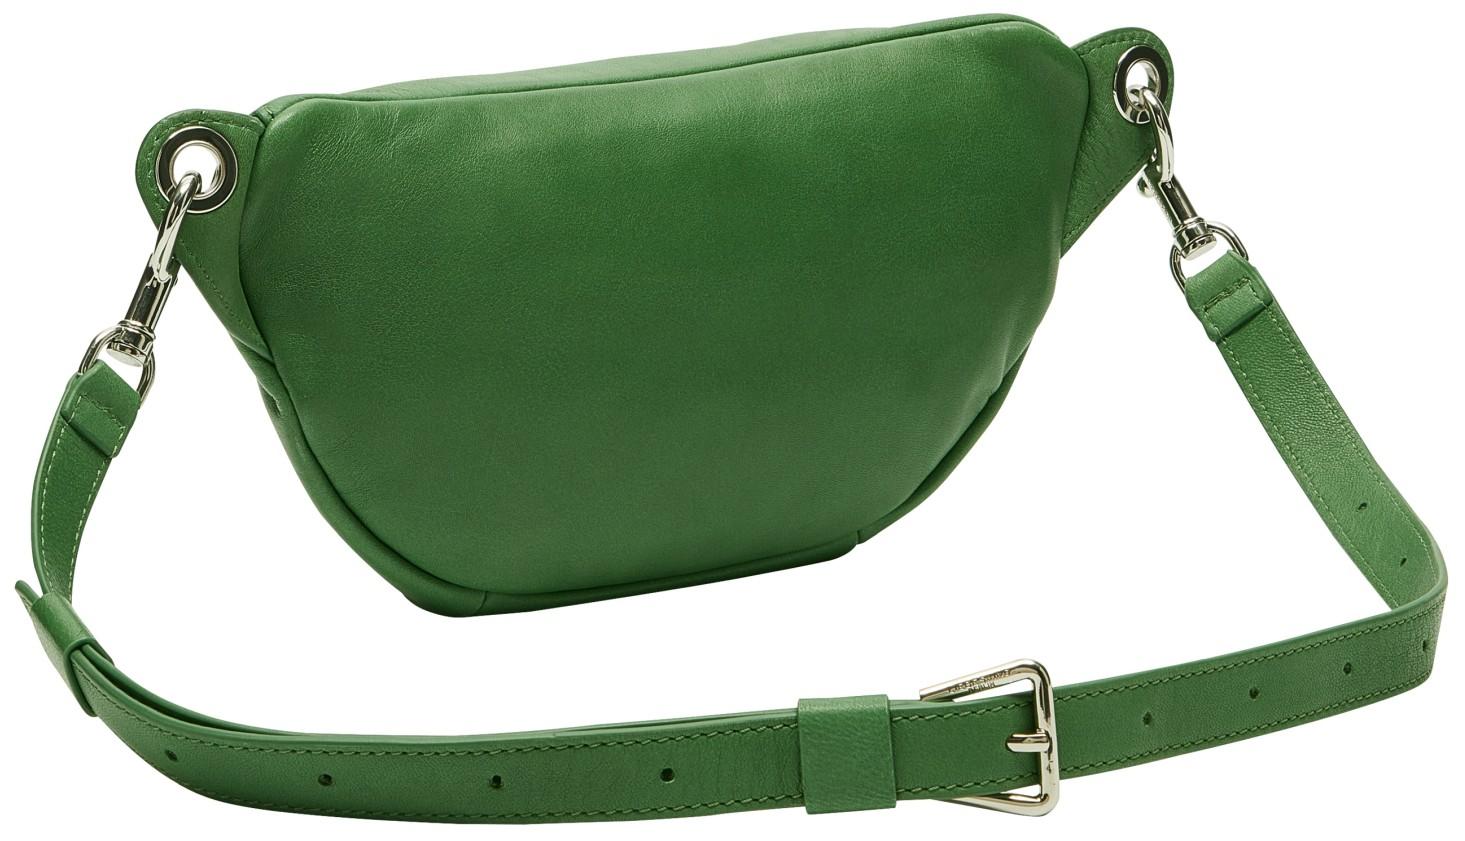 Liebeskind Crossovertasche Belt Bag Tavia grün Leder